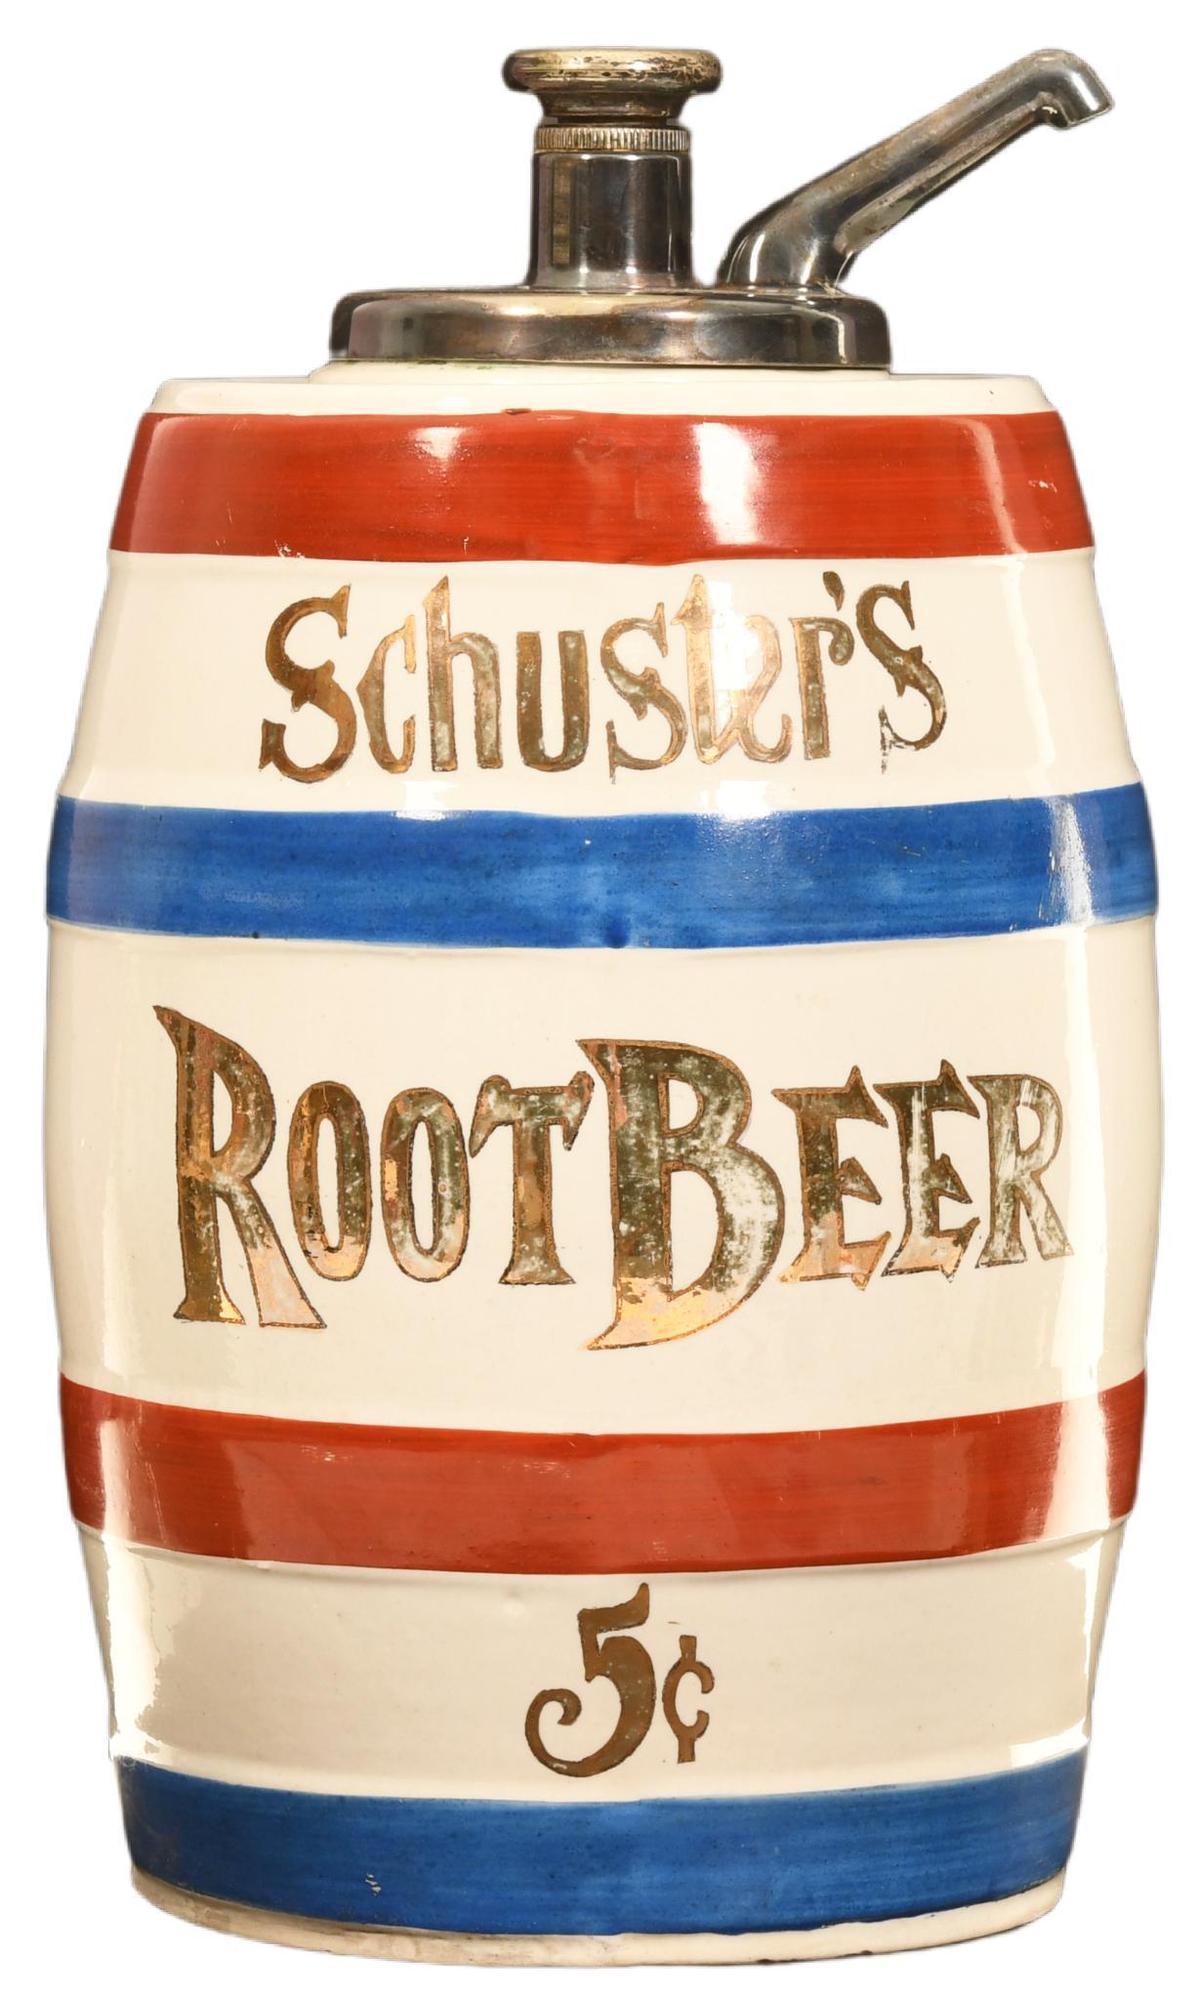 Schuster's Root Beer Ceramic Syrup Dispenser